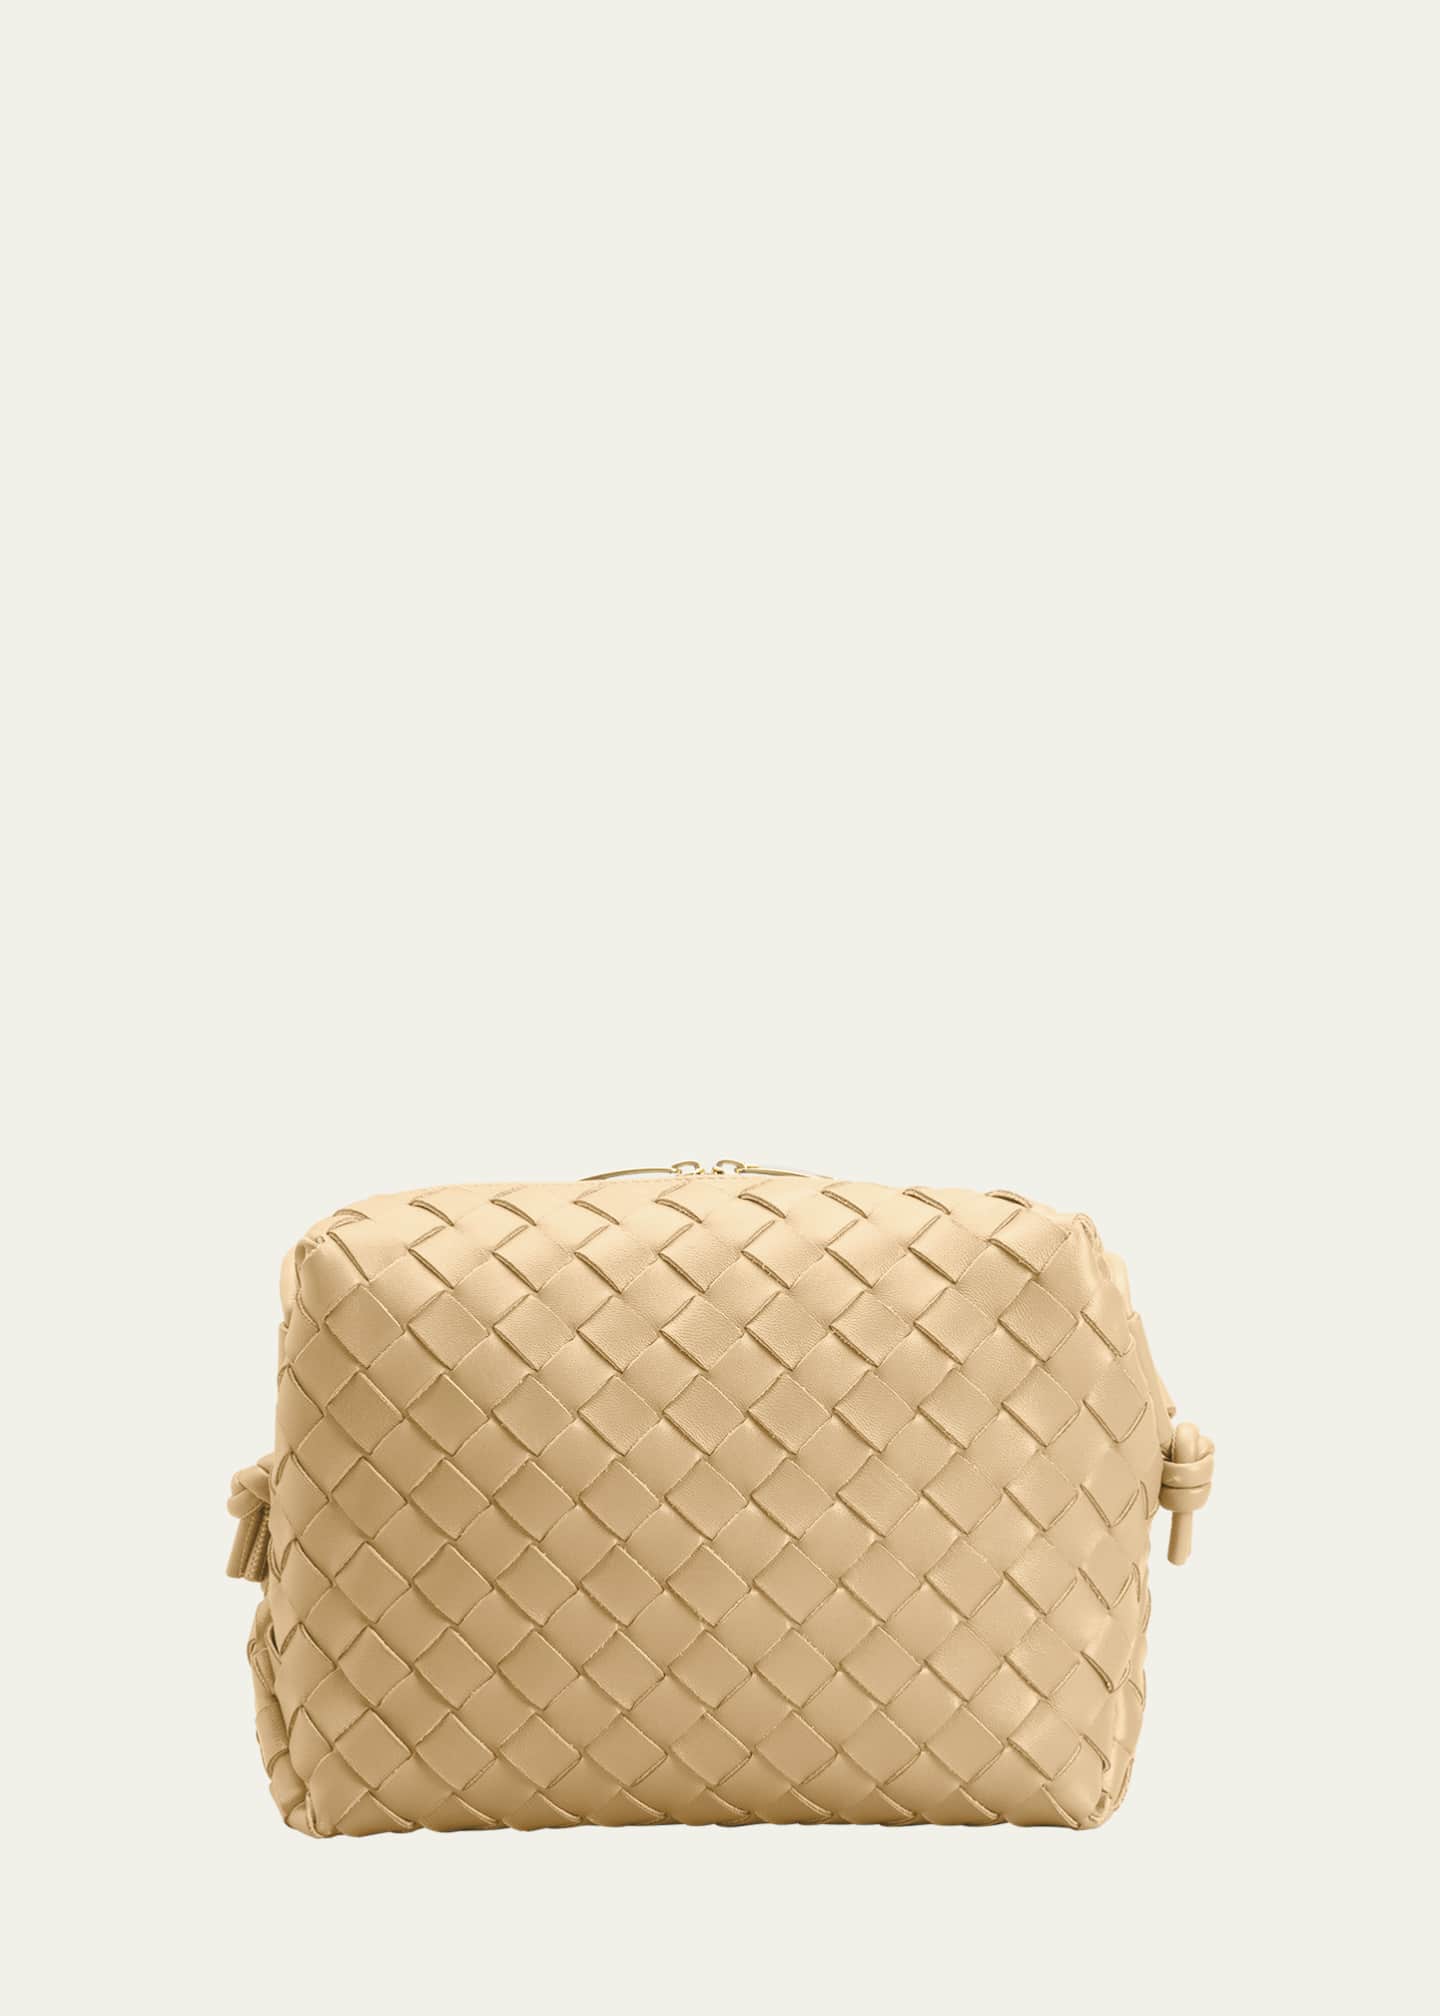 Loop Bottega Veneta Bag in Woven Leather